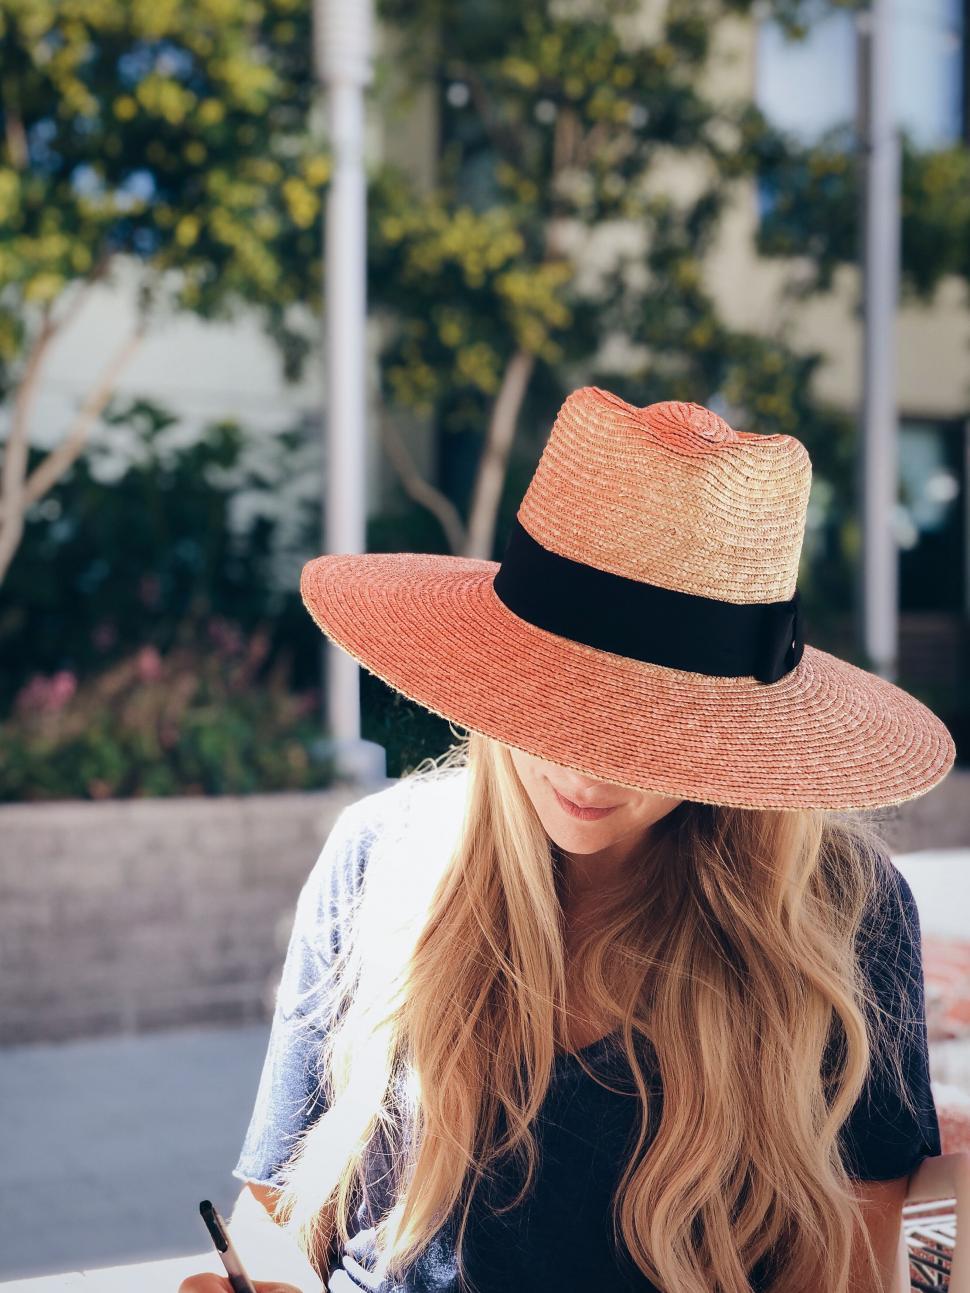 Free Image of Woman in orange straw hat using smartphone 